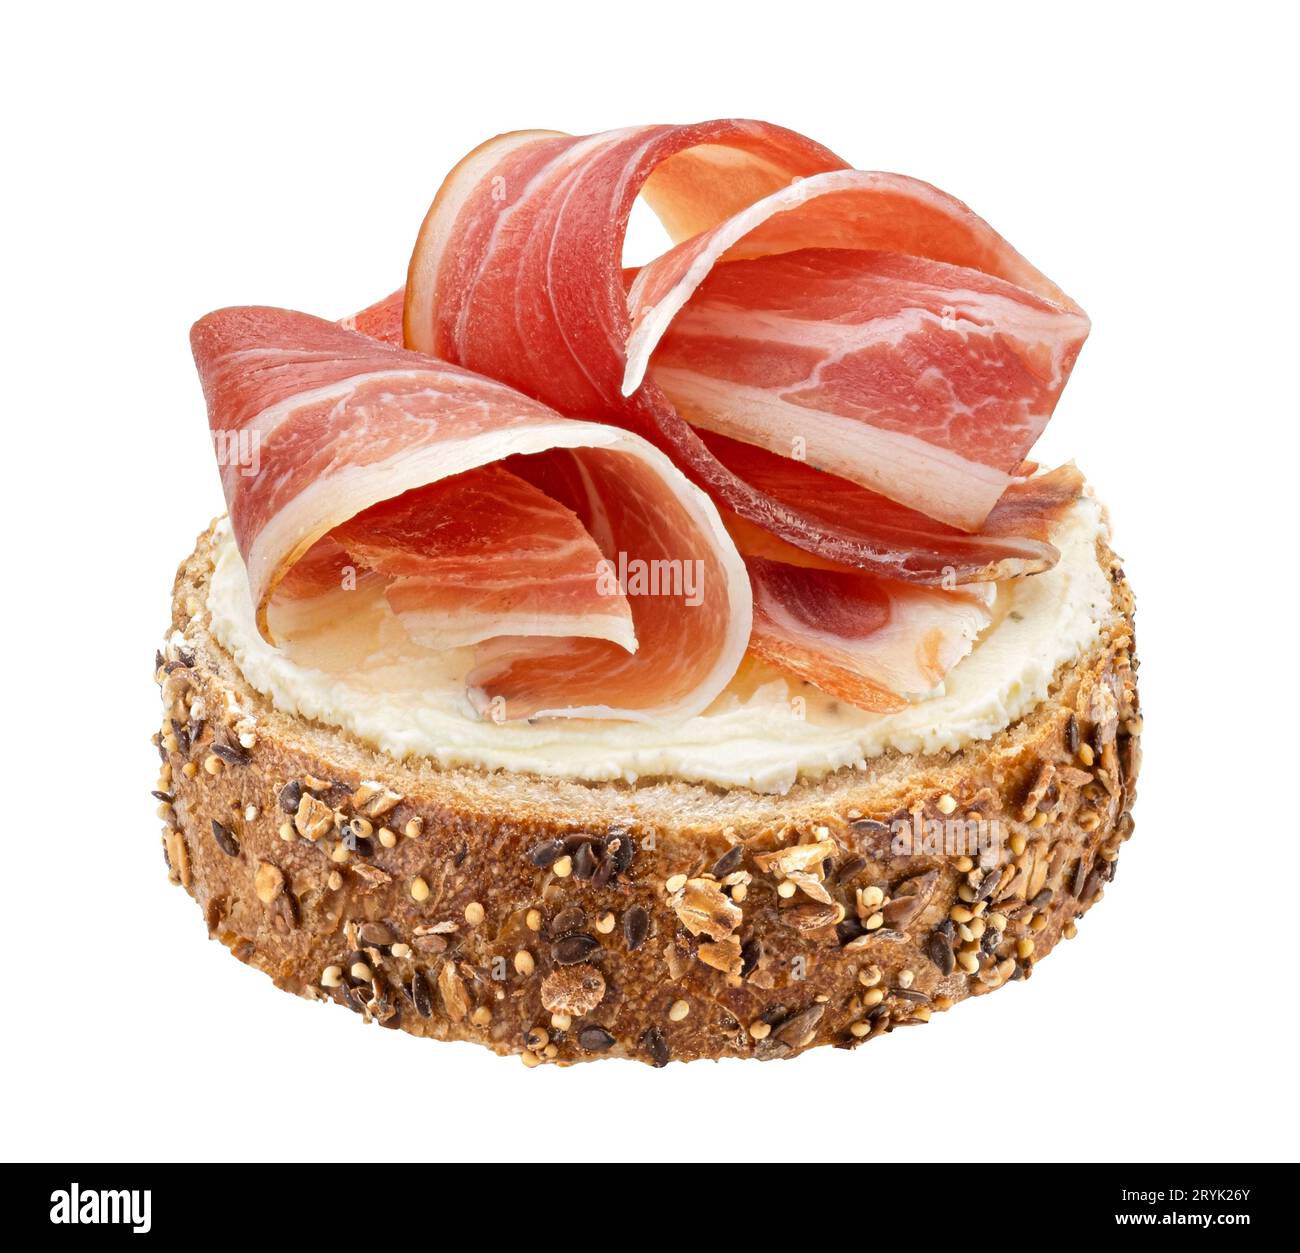 https://c8.alamy.com/comp/2RYK26Y/smoked-bacon-slices-on-rye-bread-sandwich-with-pork-ham-2RYK26Y.jpg